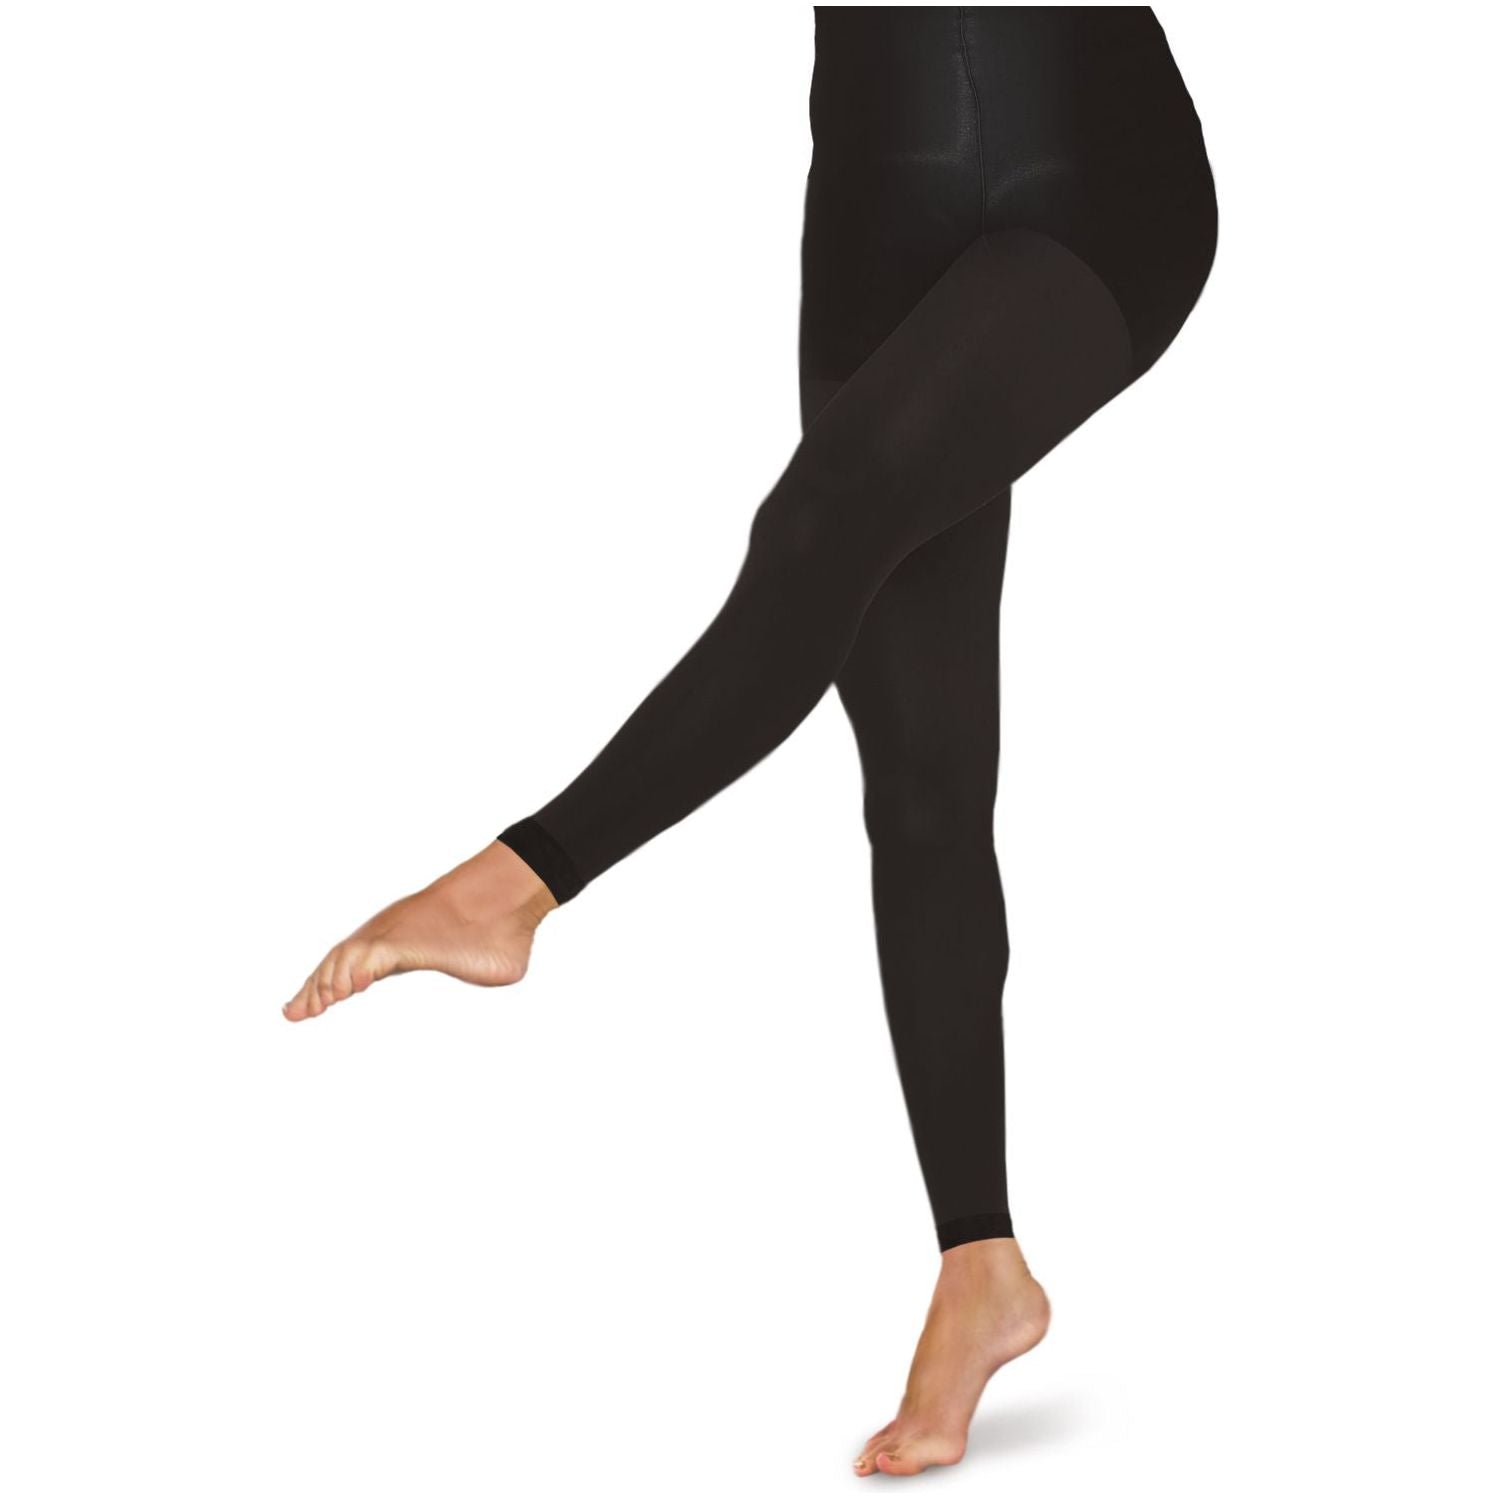 FLASEEK] Compression Leg Support Leggings Premium - Black (10 F.S.P.)